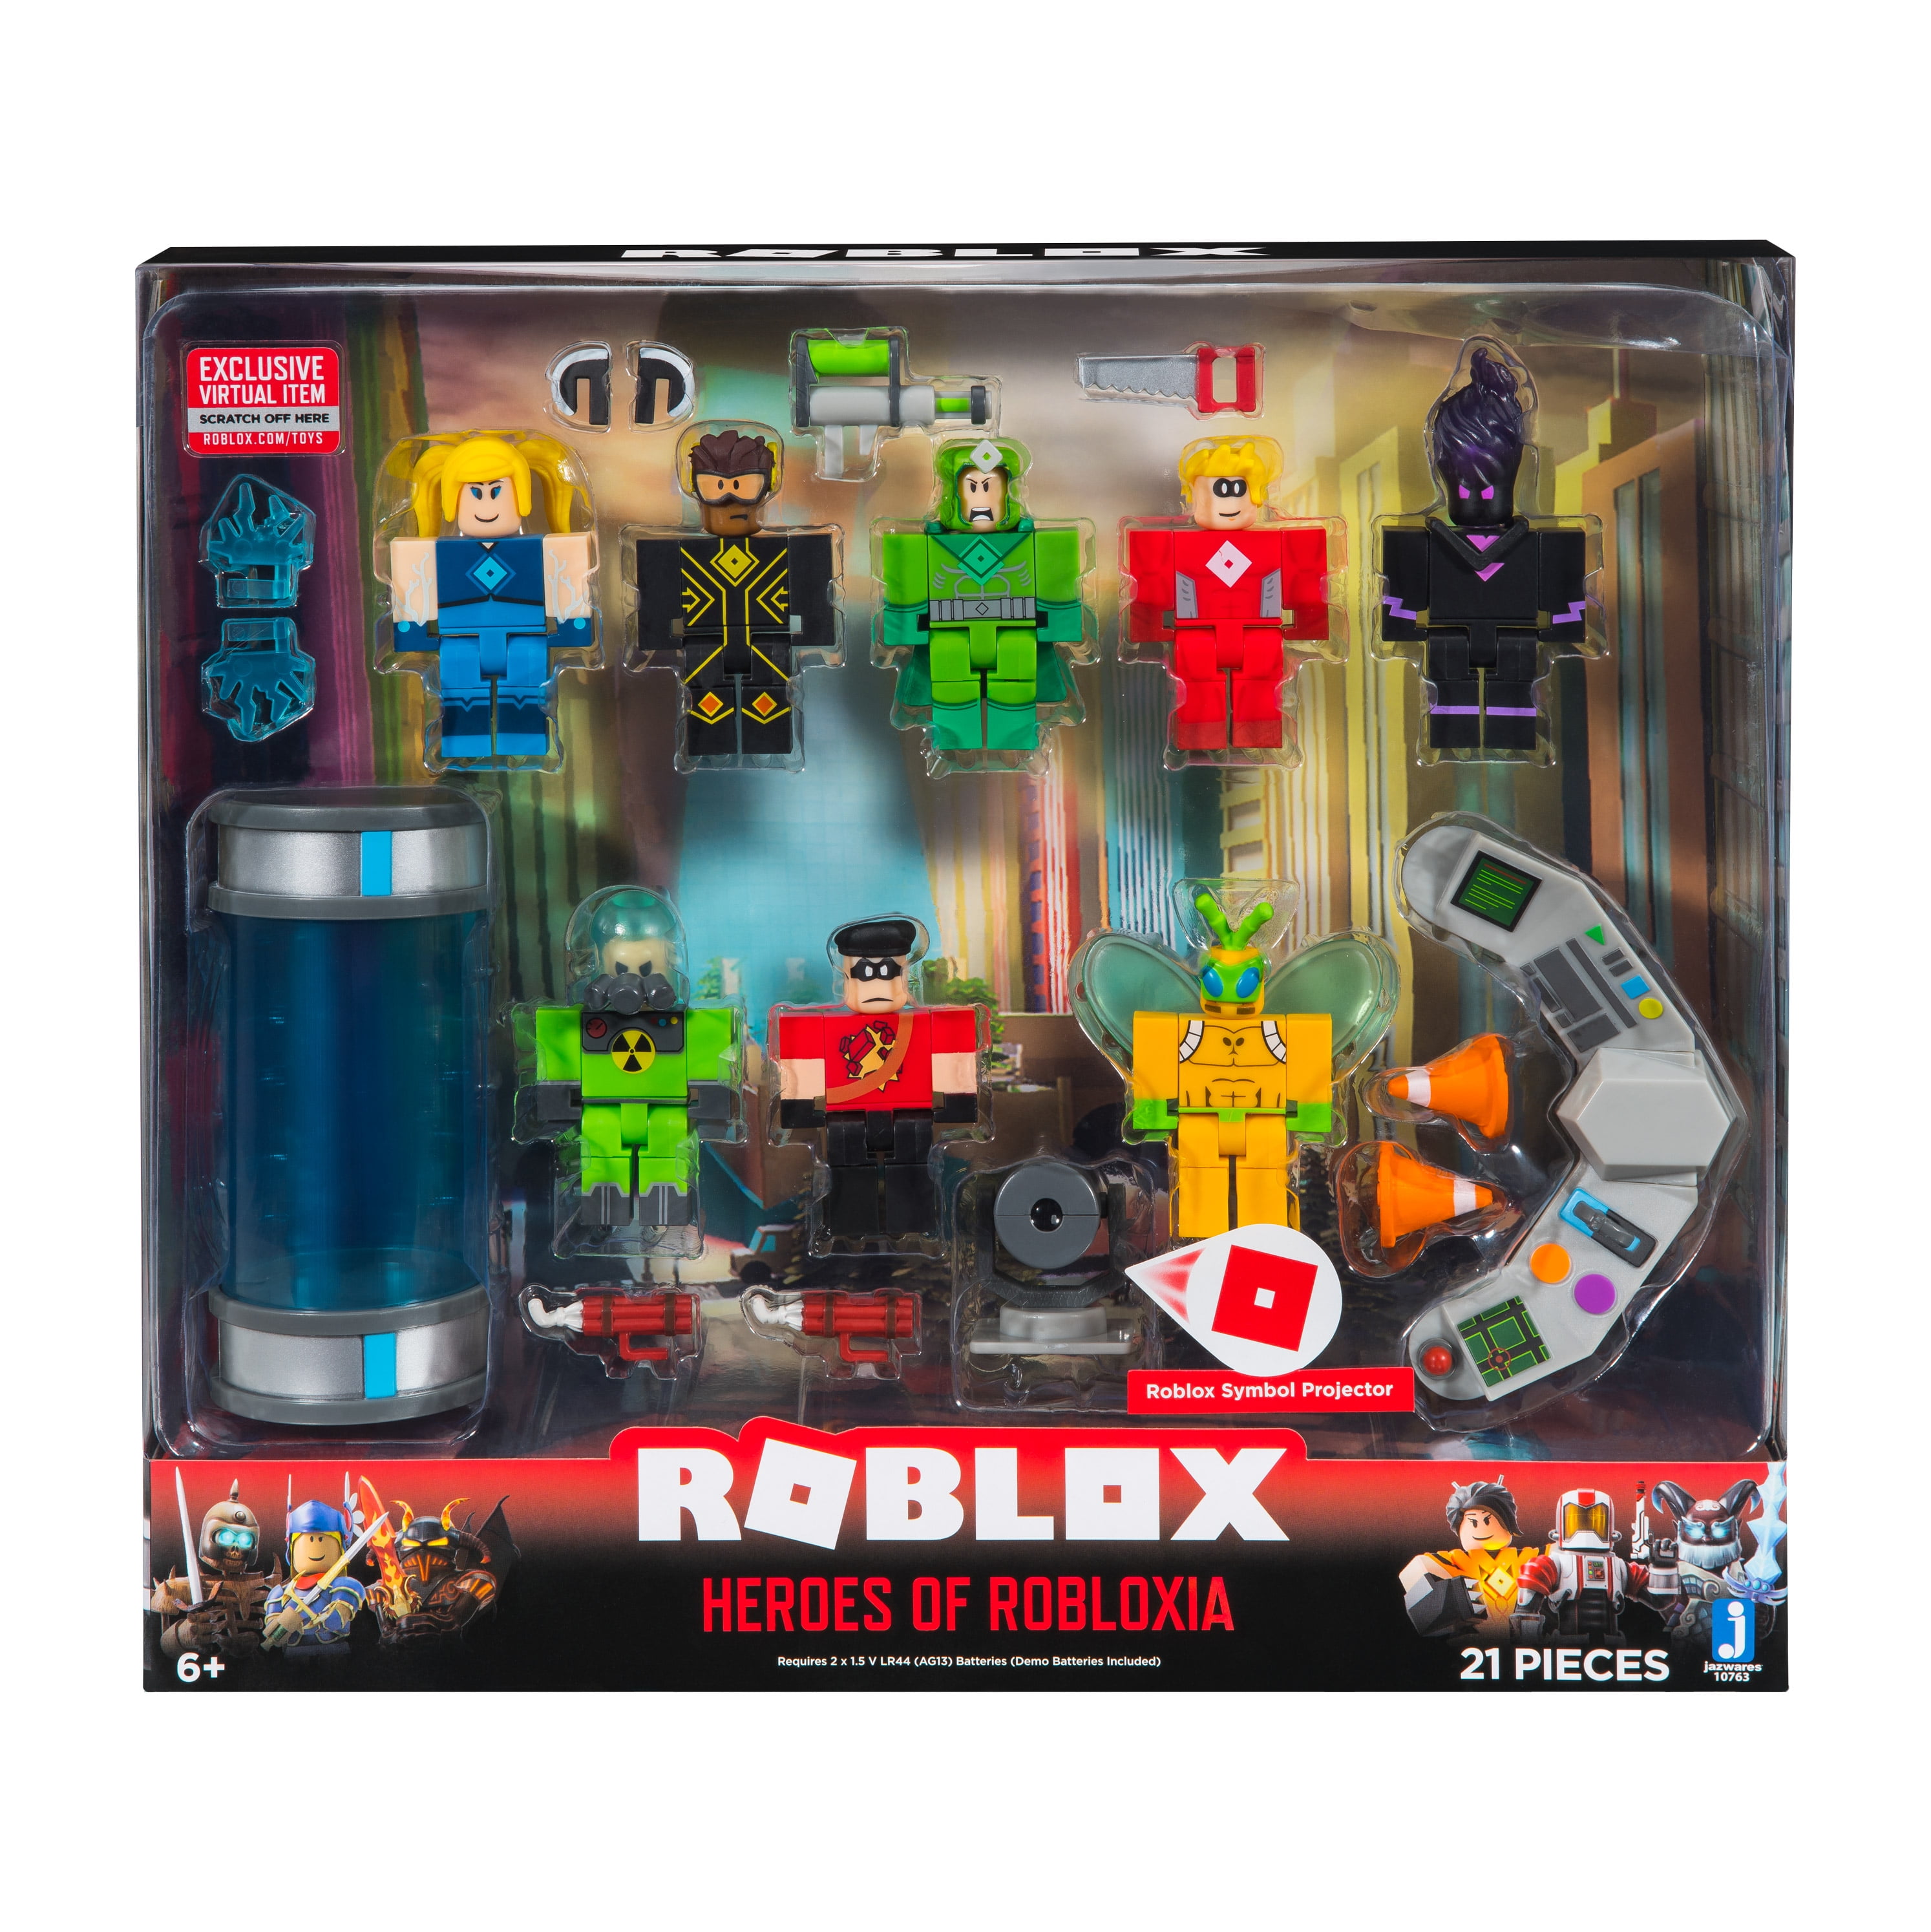 Roblox Action Collection Heroes Of Robloxia Playset Includes Exclusive Virtual Item Walmart Com Walmart Com - evil milk man roblox